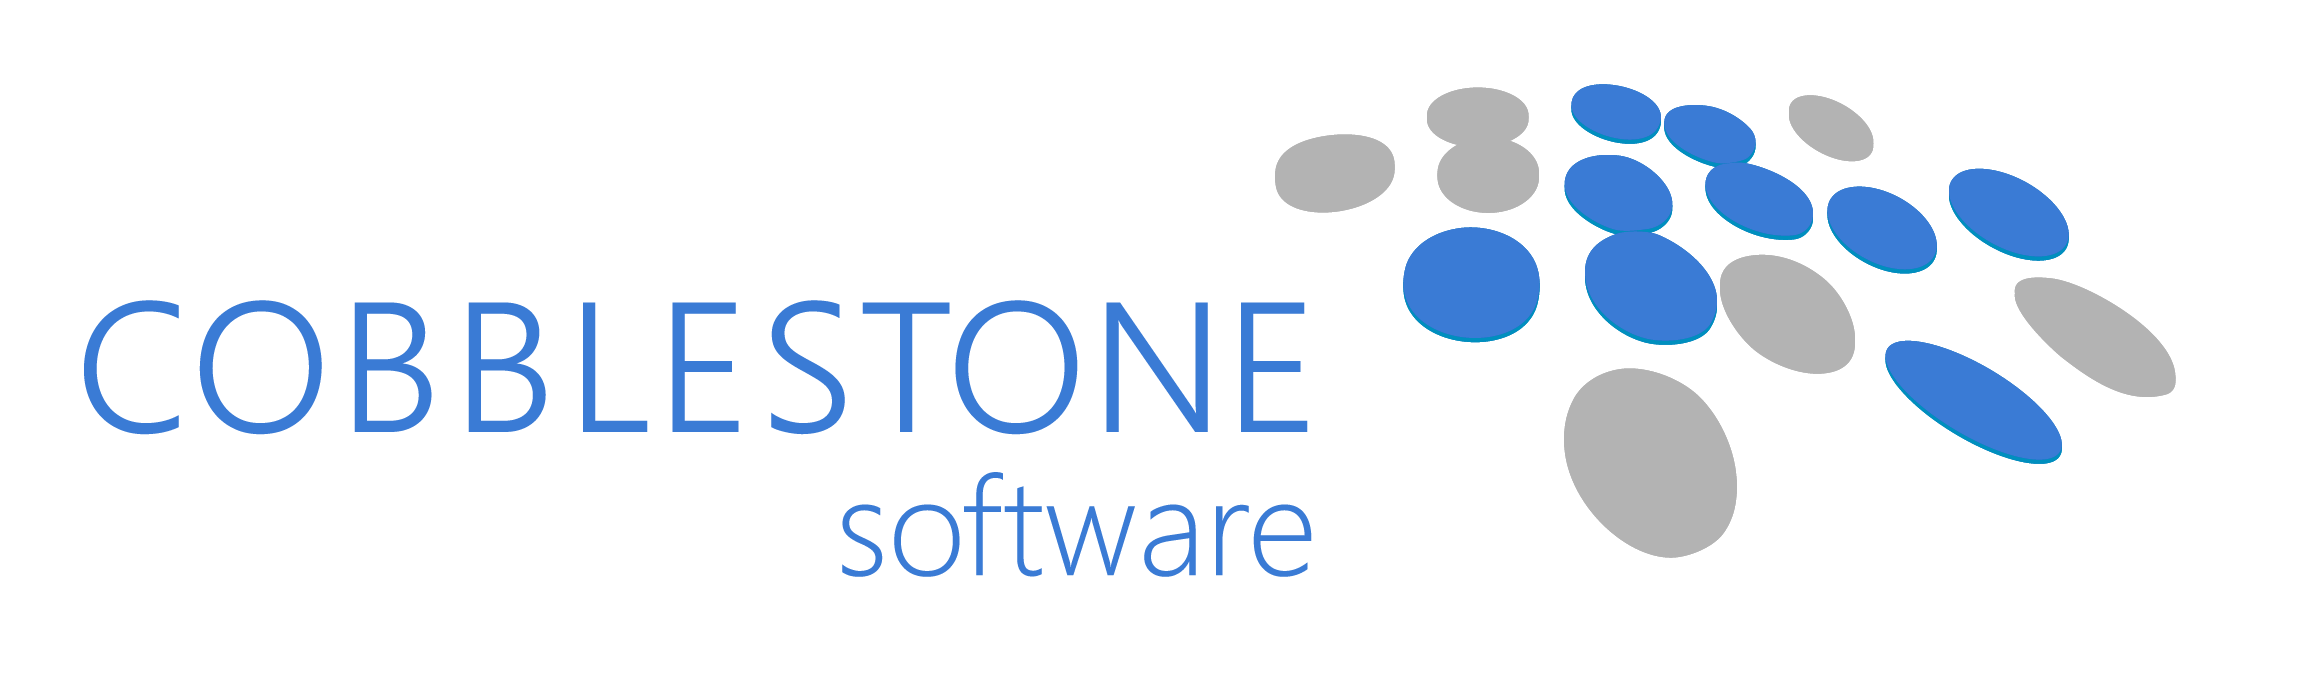 CobbleStone Contract Management Software.